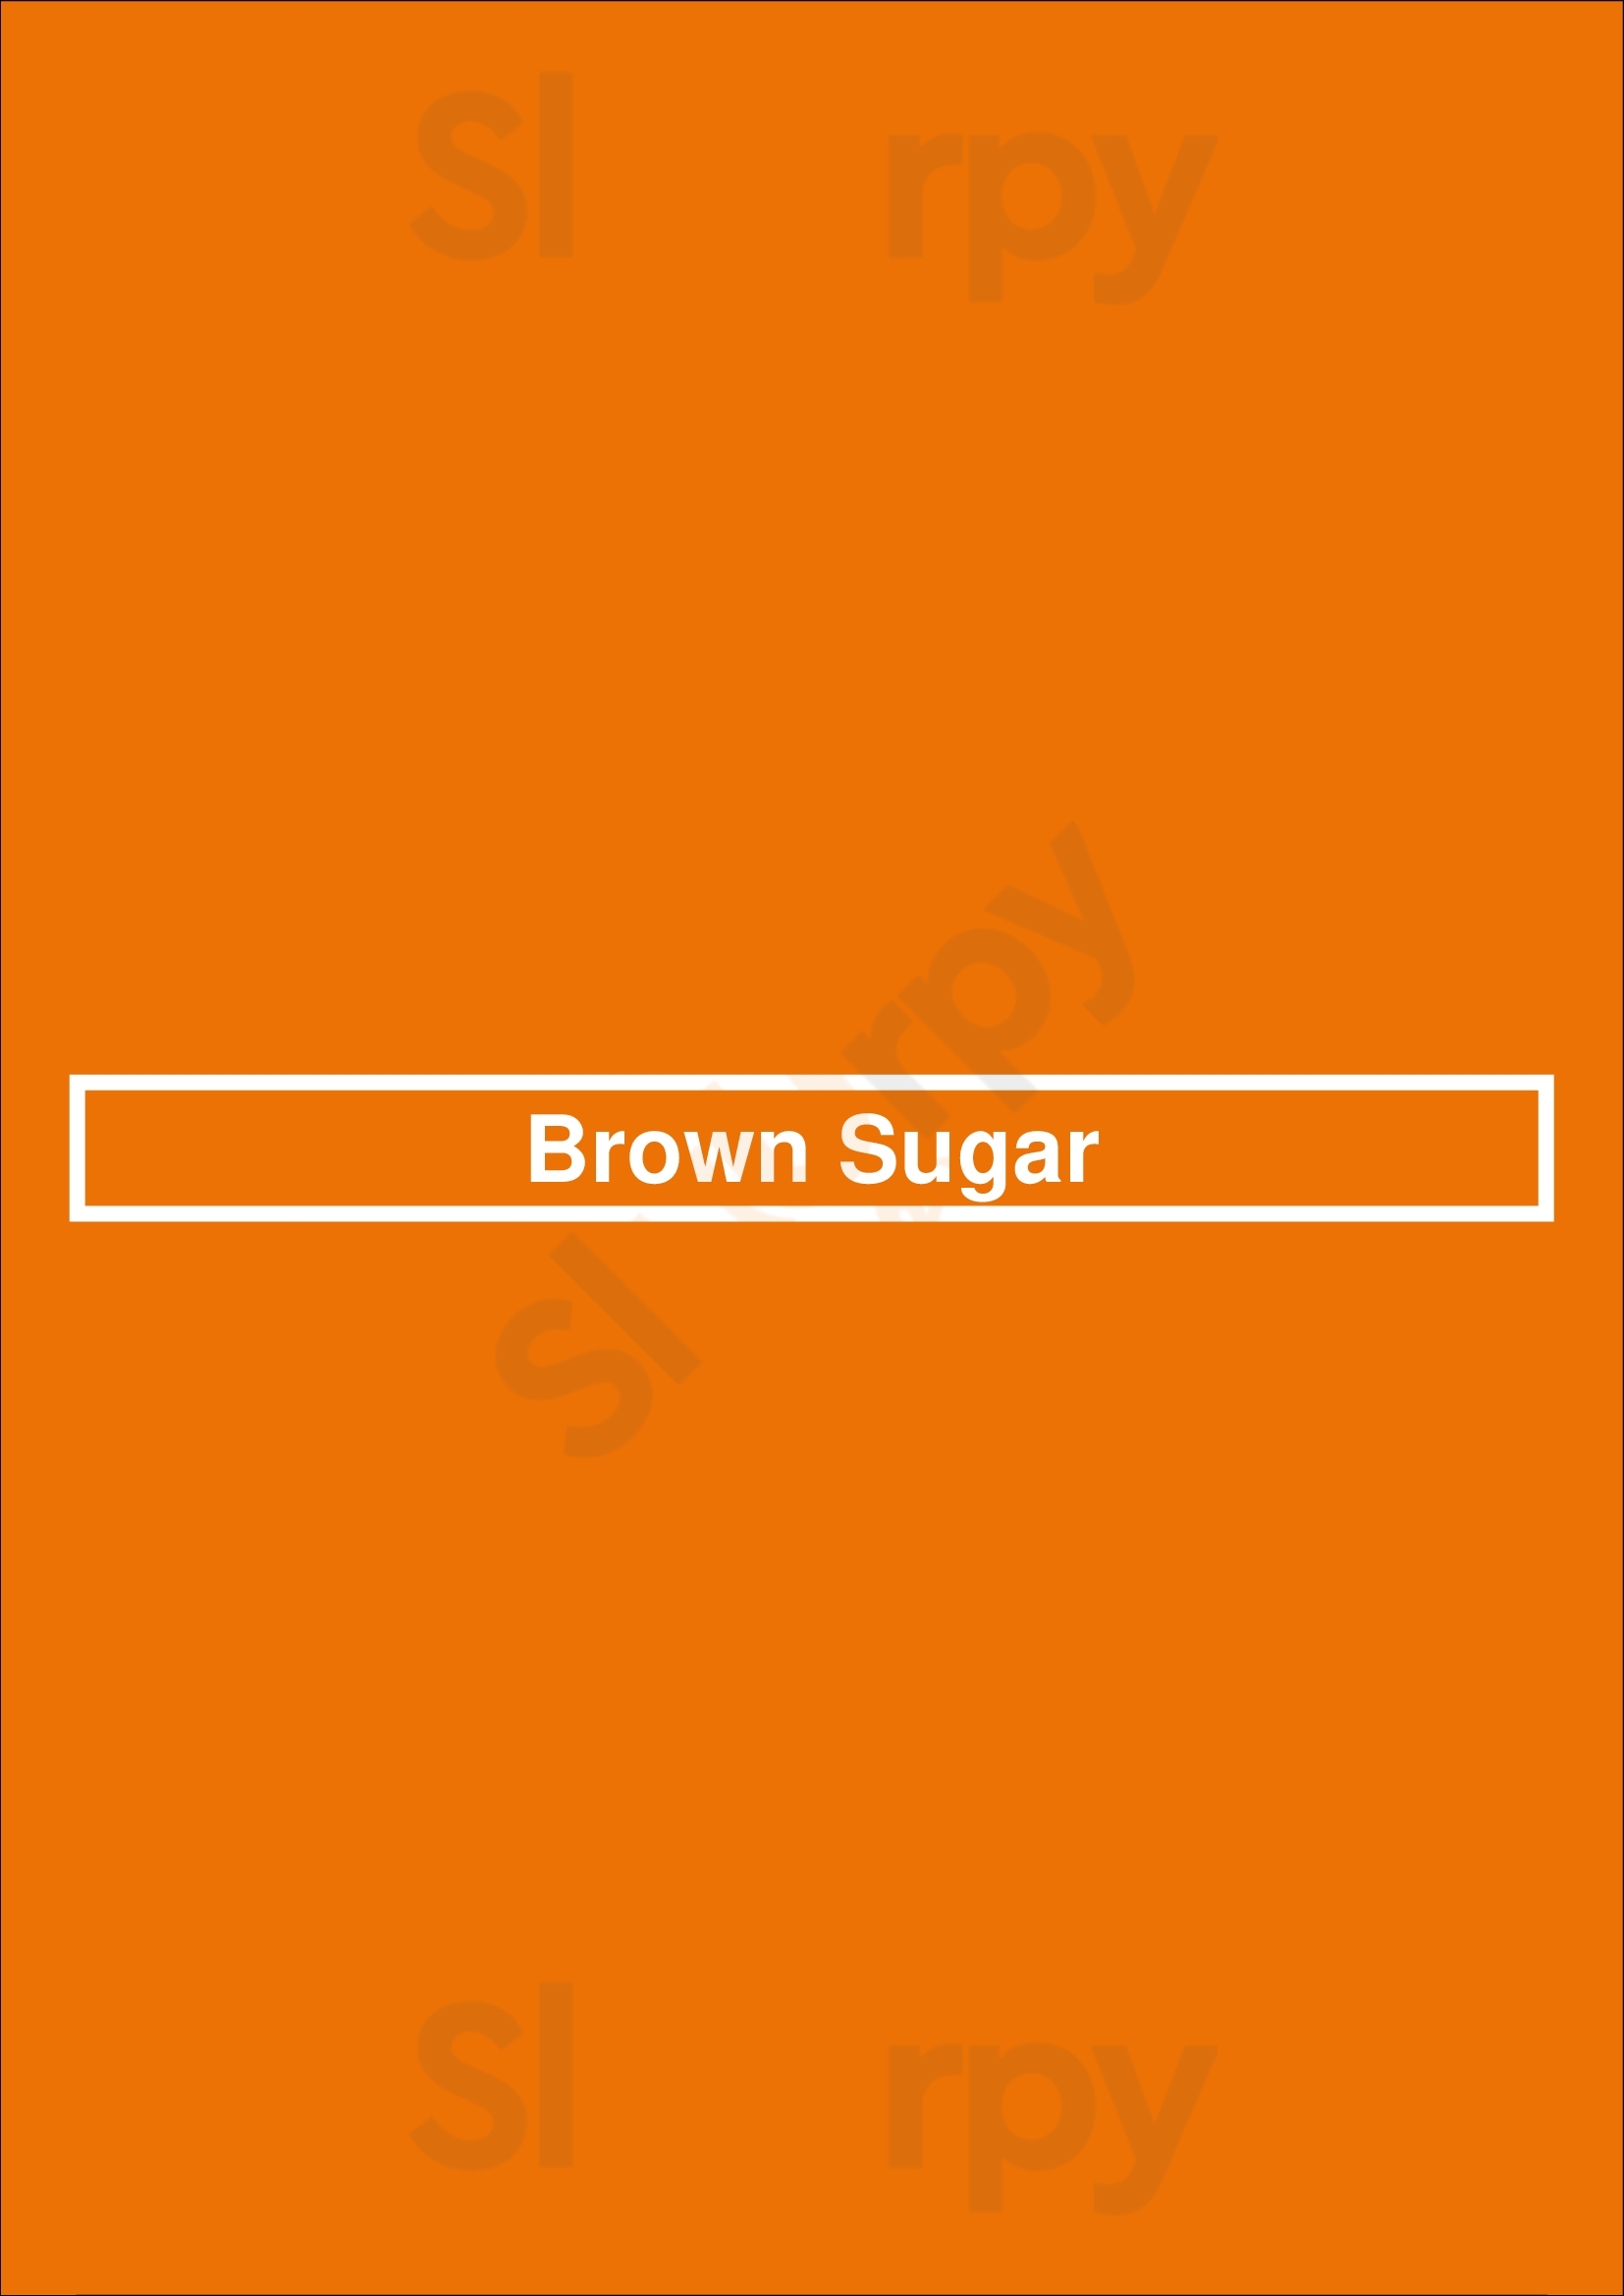 Brown Sugar Bondi Bondi Menu - 1